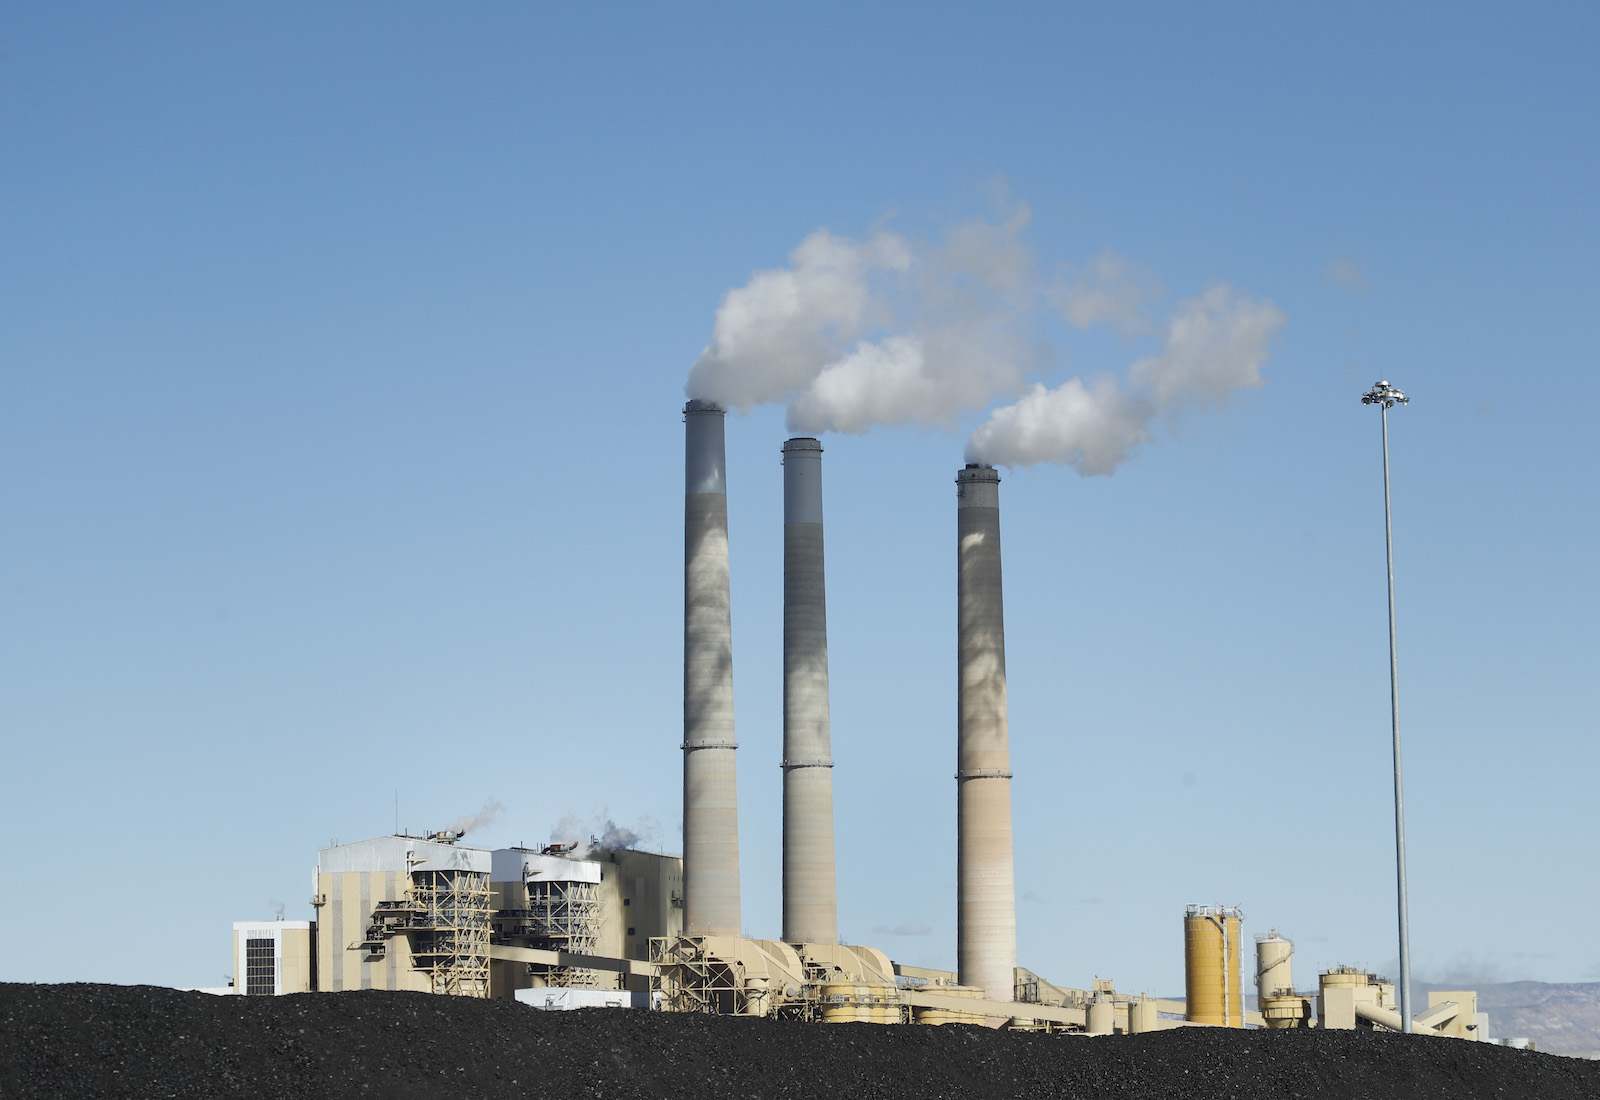 A coal plant with smokestacks blowing smoke